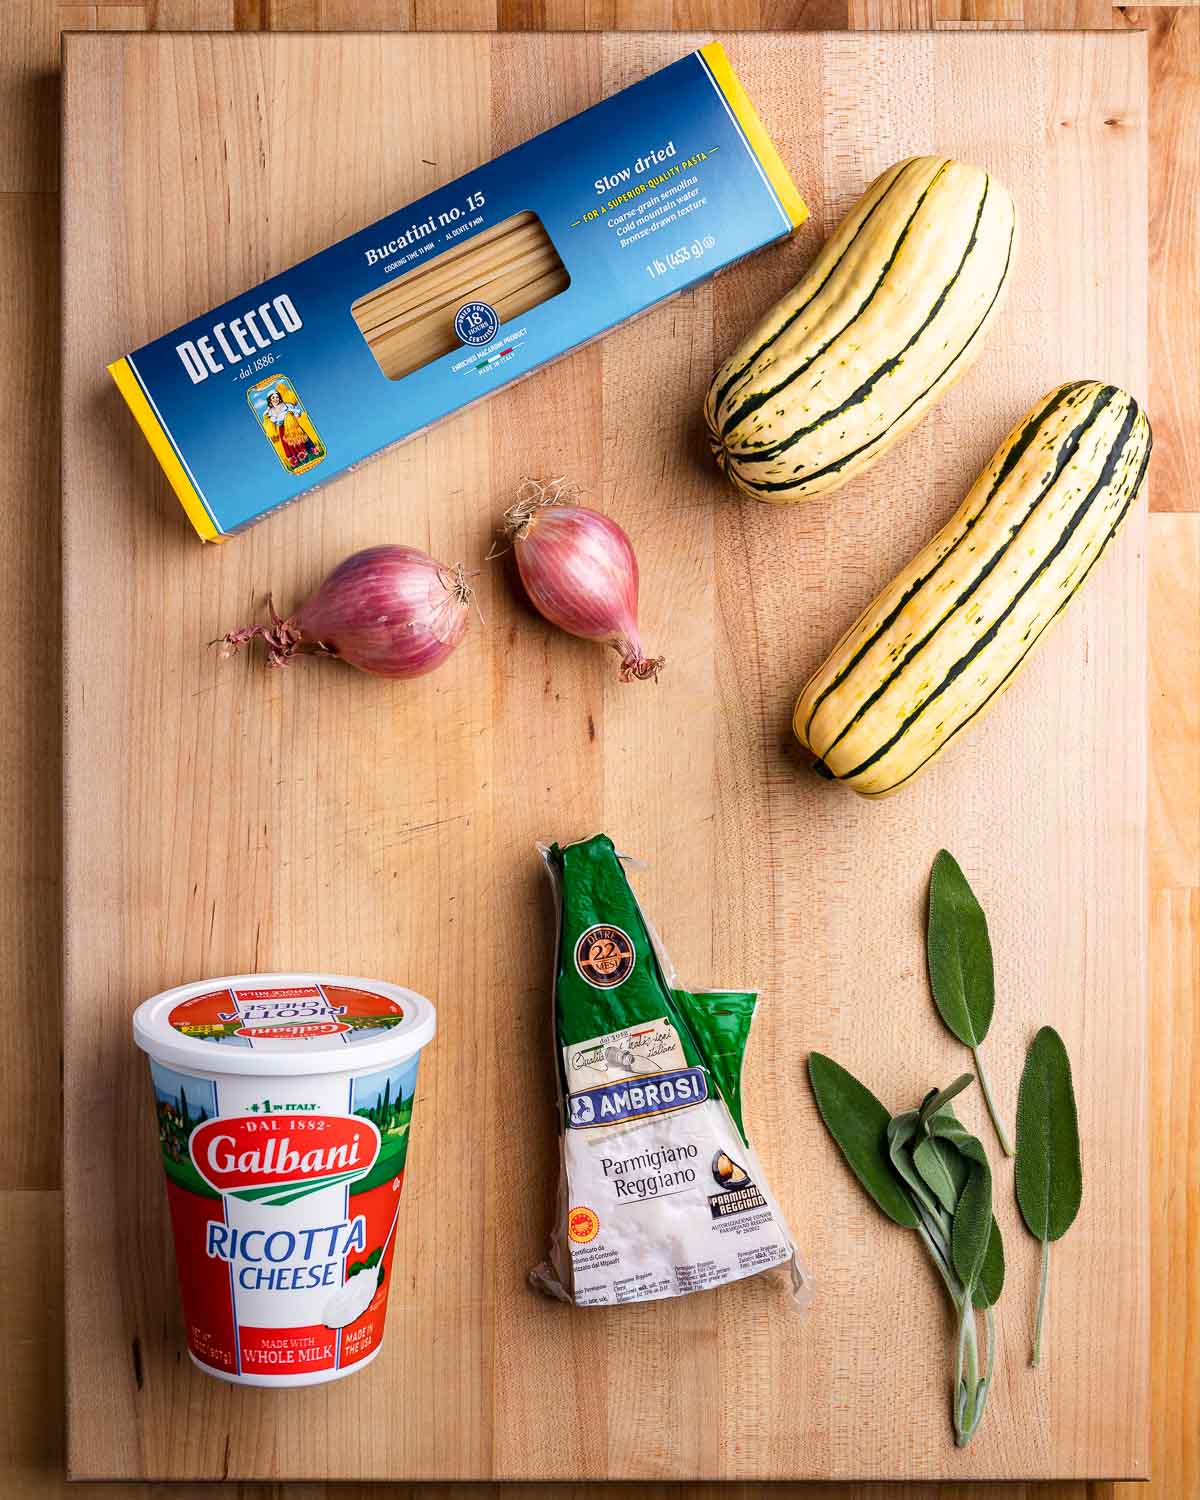 Ingredients shown: bucatini pasta, shallots, delicata squash, ricotta, parmesan, and sage leaves.